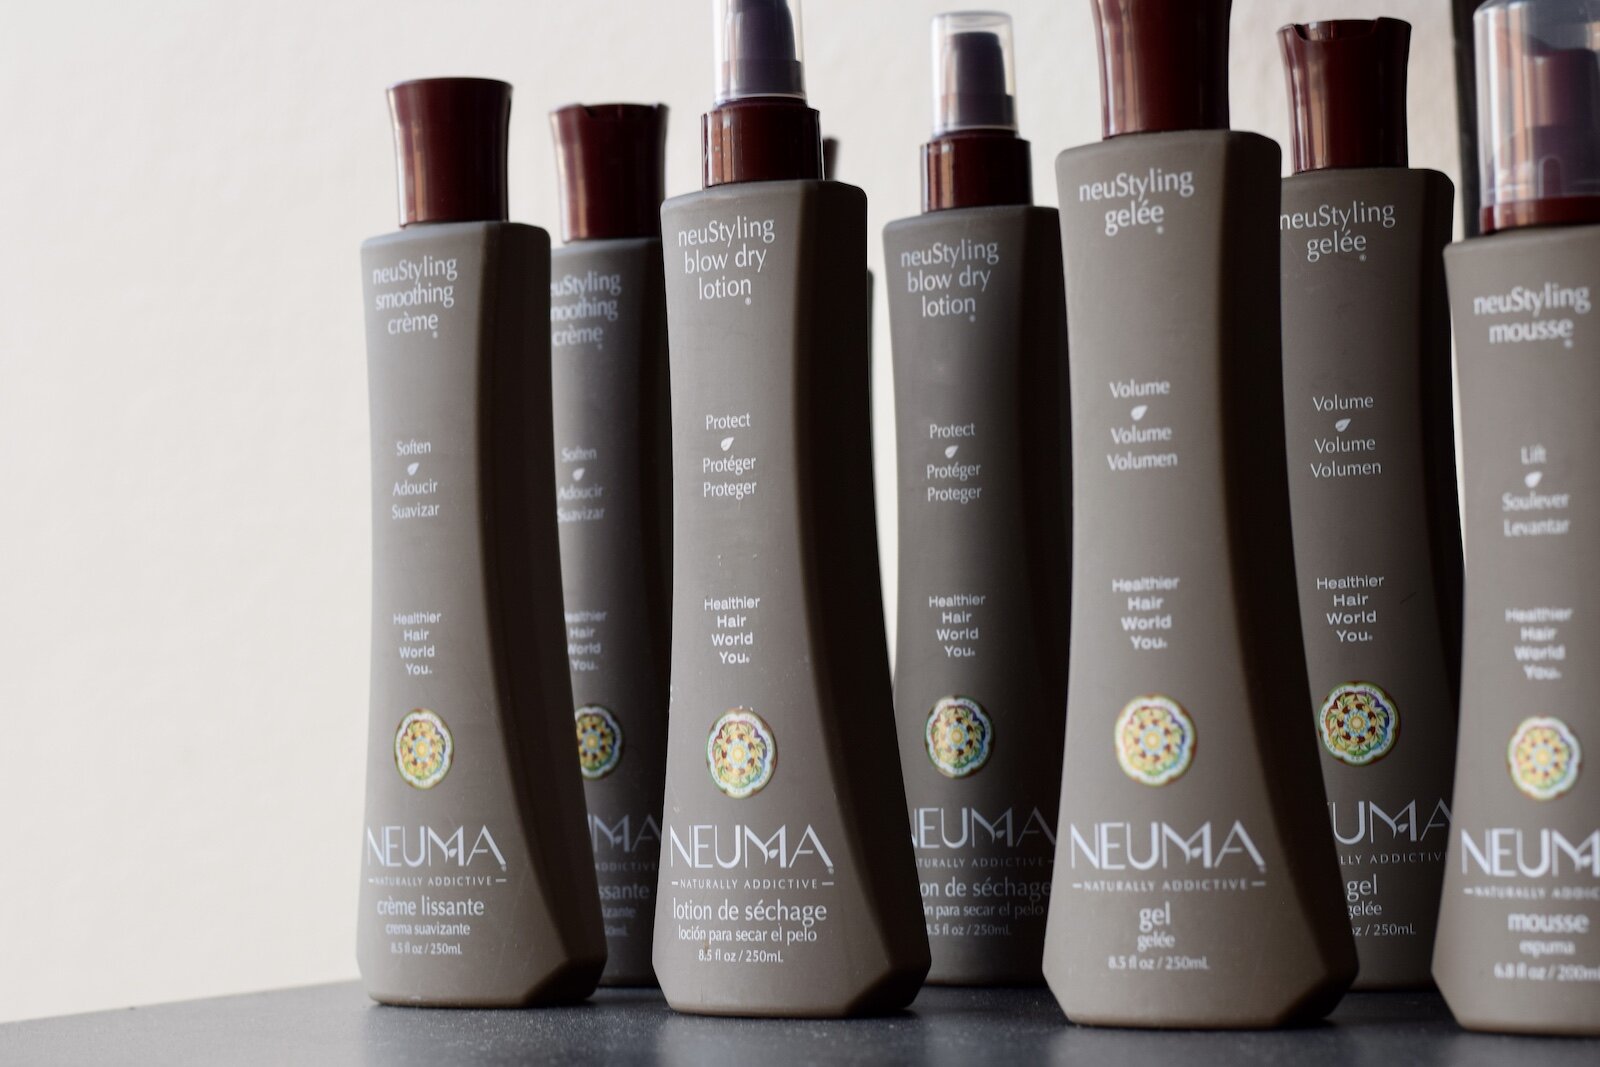 Michael Michael's Salon and Spa carries Neuma, a vegan hair care line.